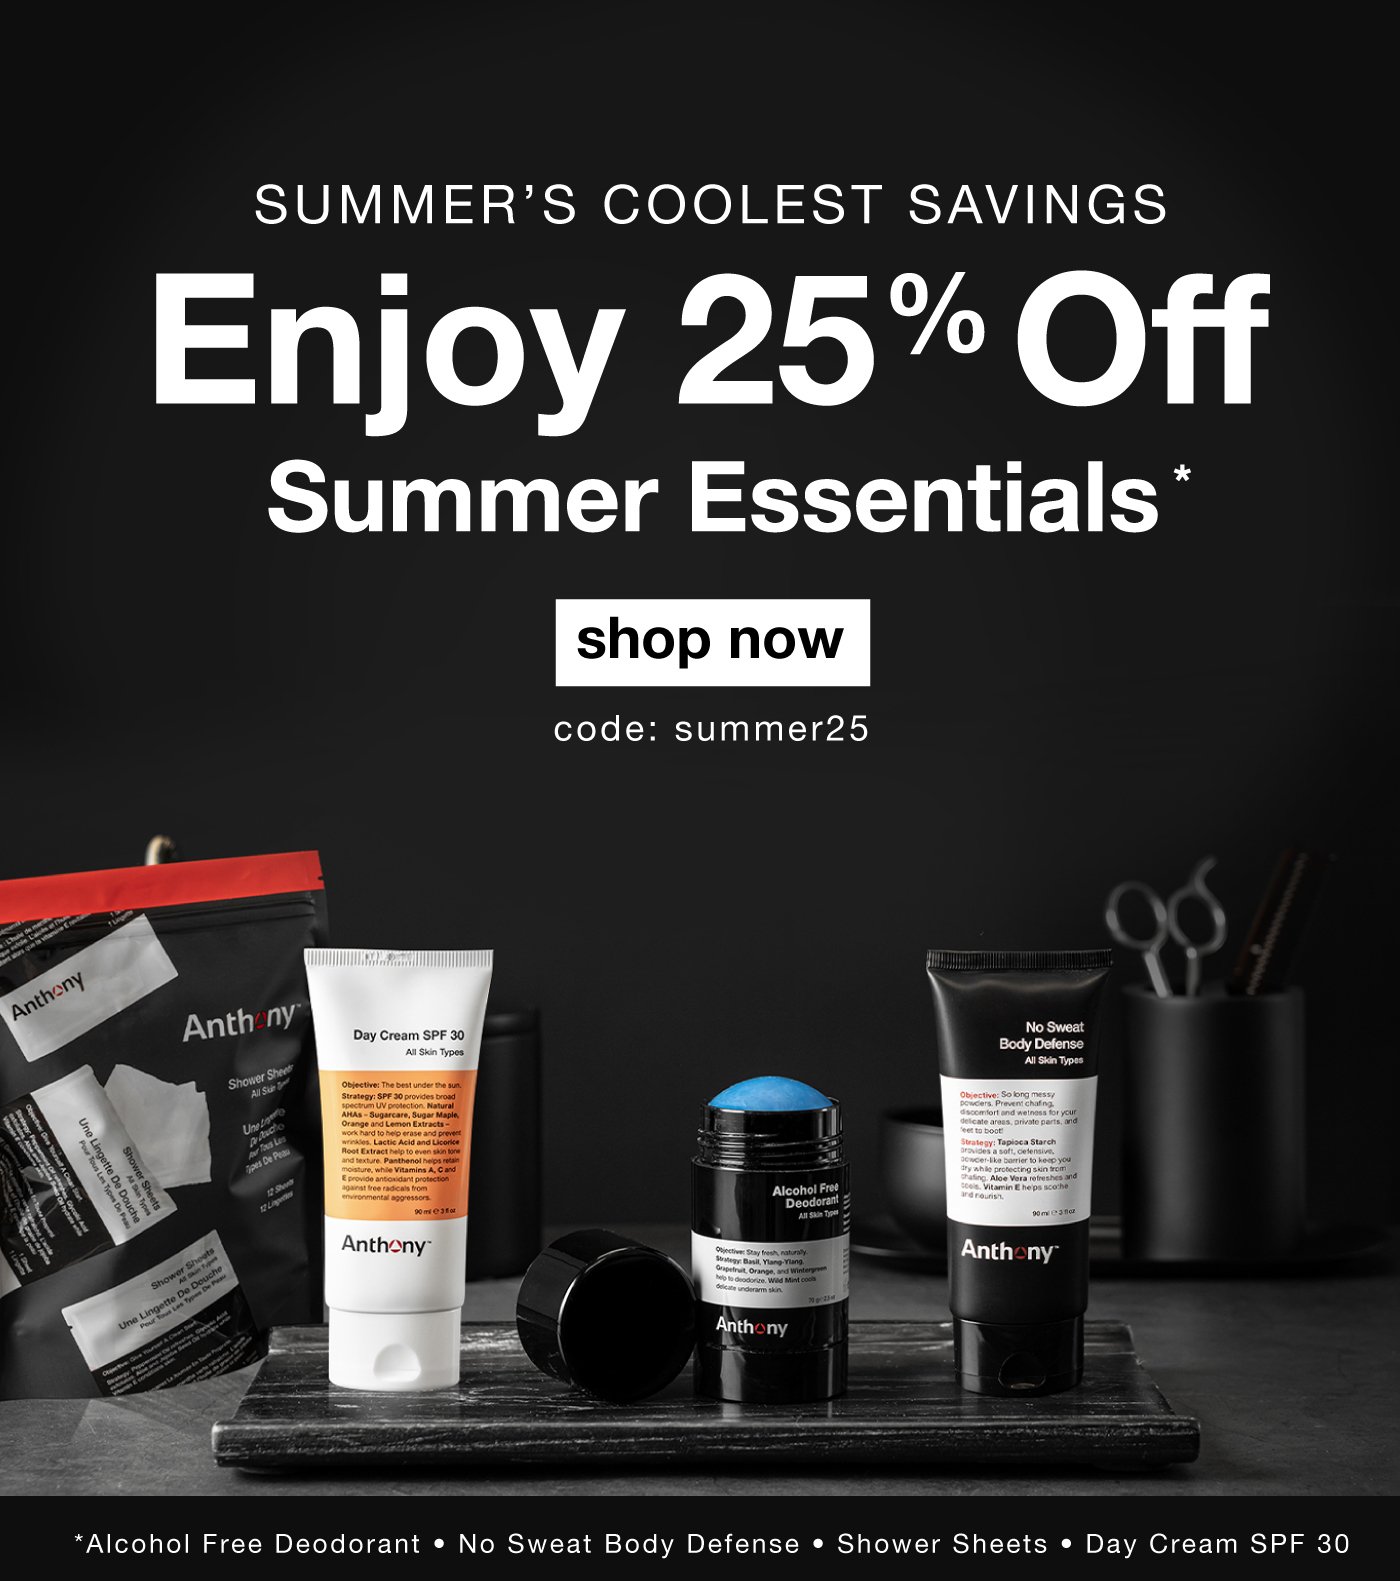 25% off summer essentials, Use Code: Summer25